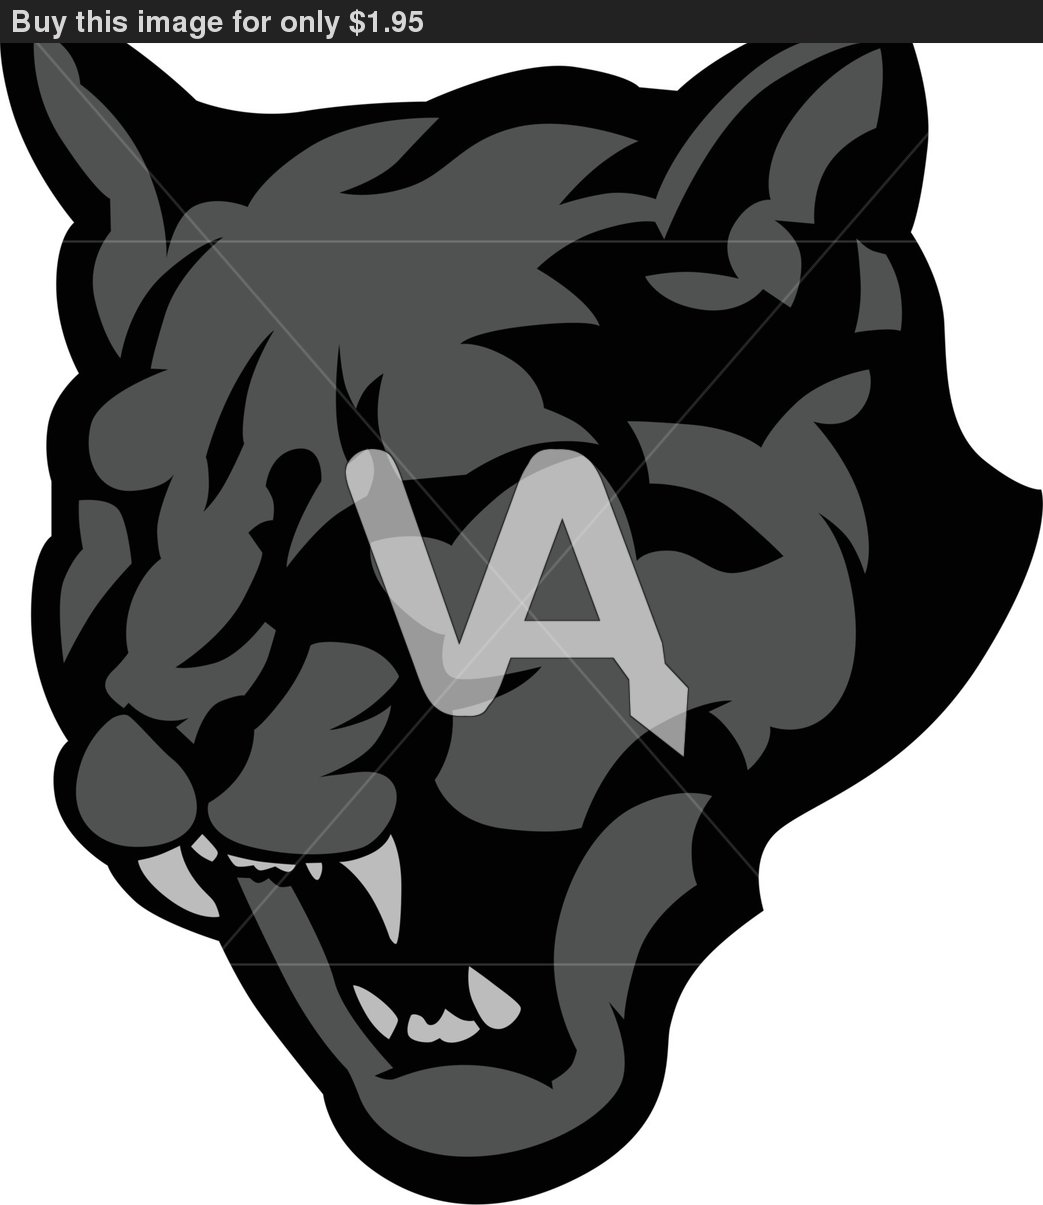 Mascot Image Of A Black Panther Head Ddfe 1043x1205 Pixel 80 Kb Jpg